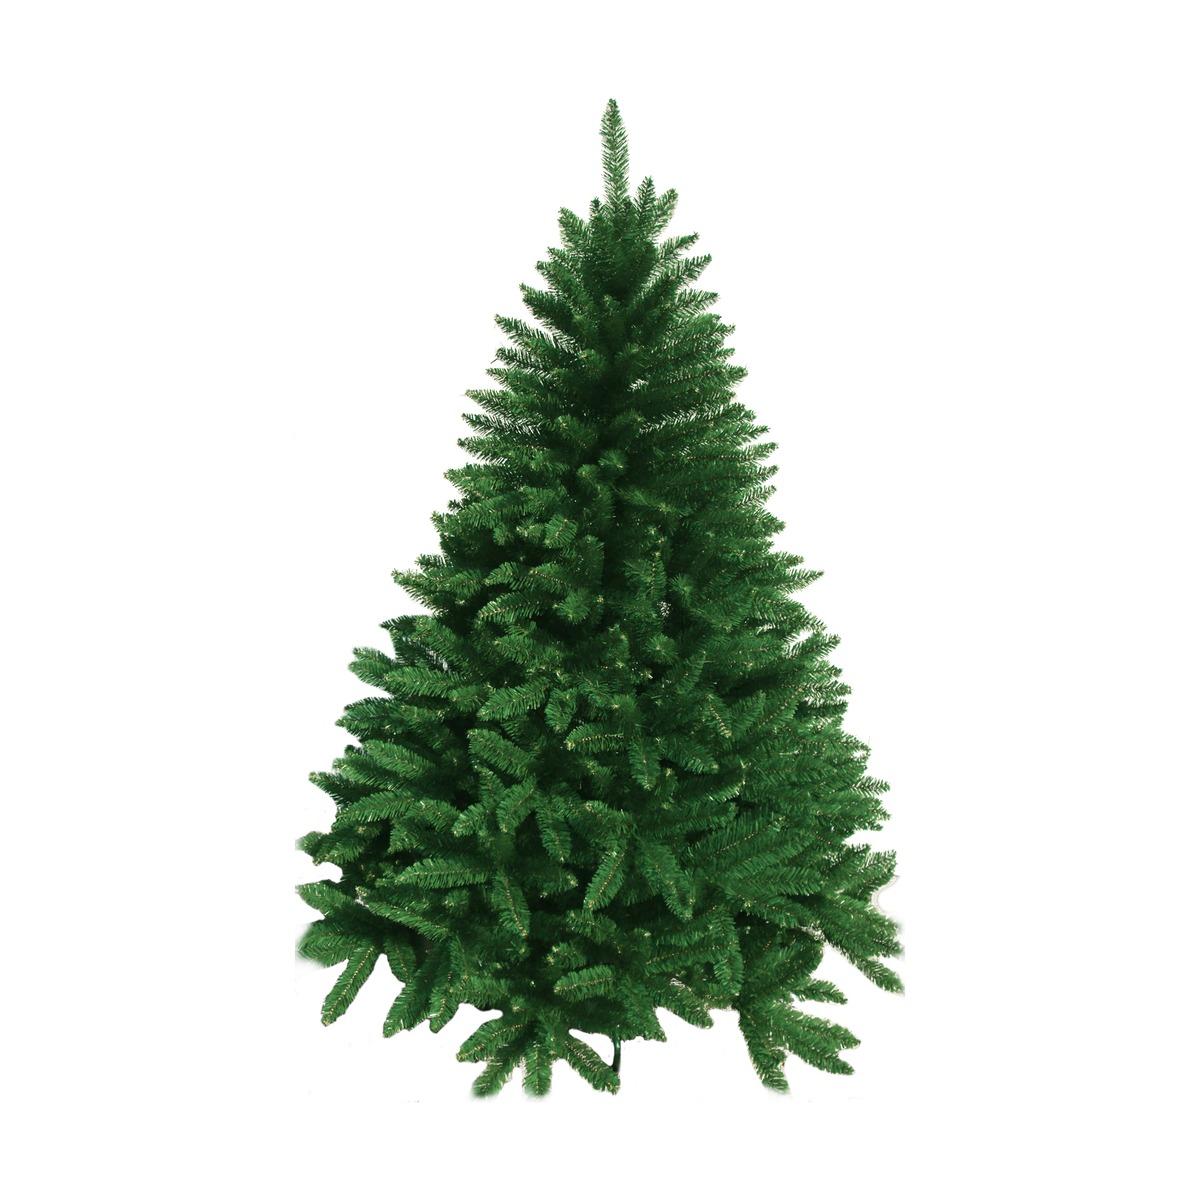 Sapin de Noël canadien en plastique - Hauteur 120 cm - Vert